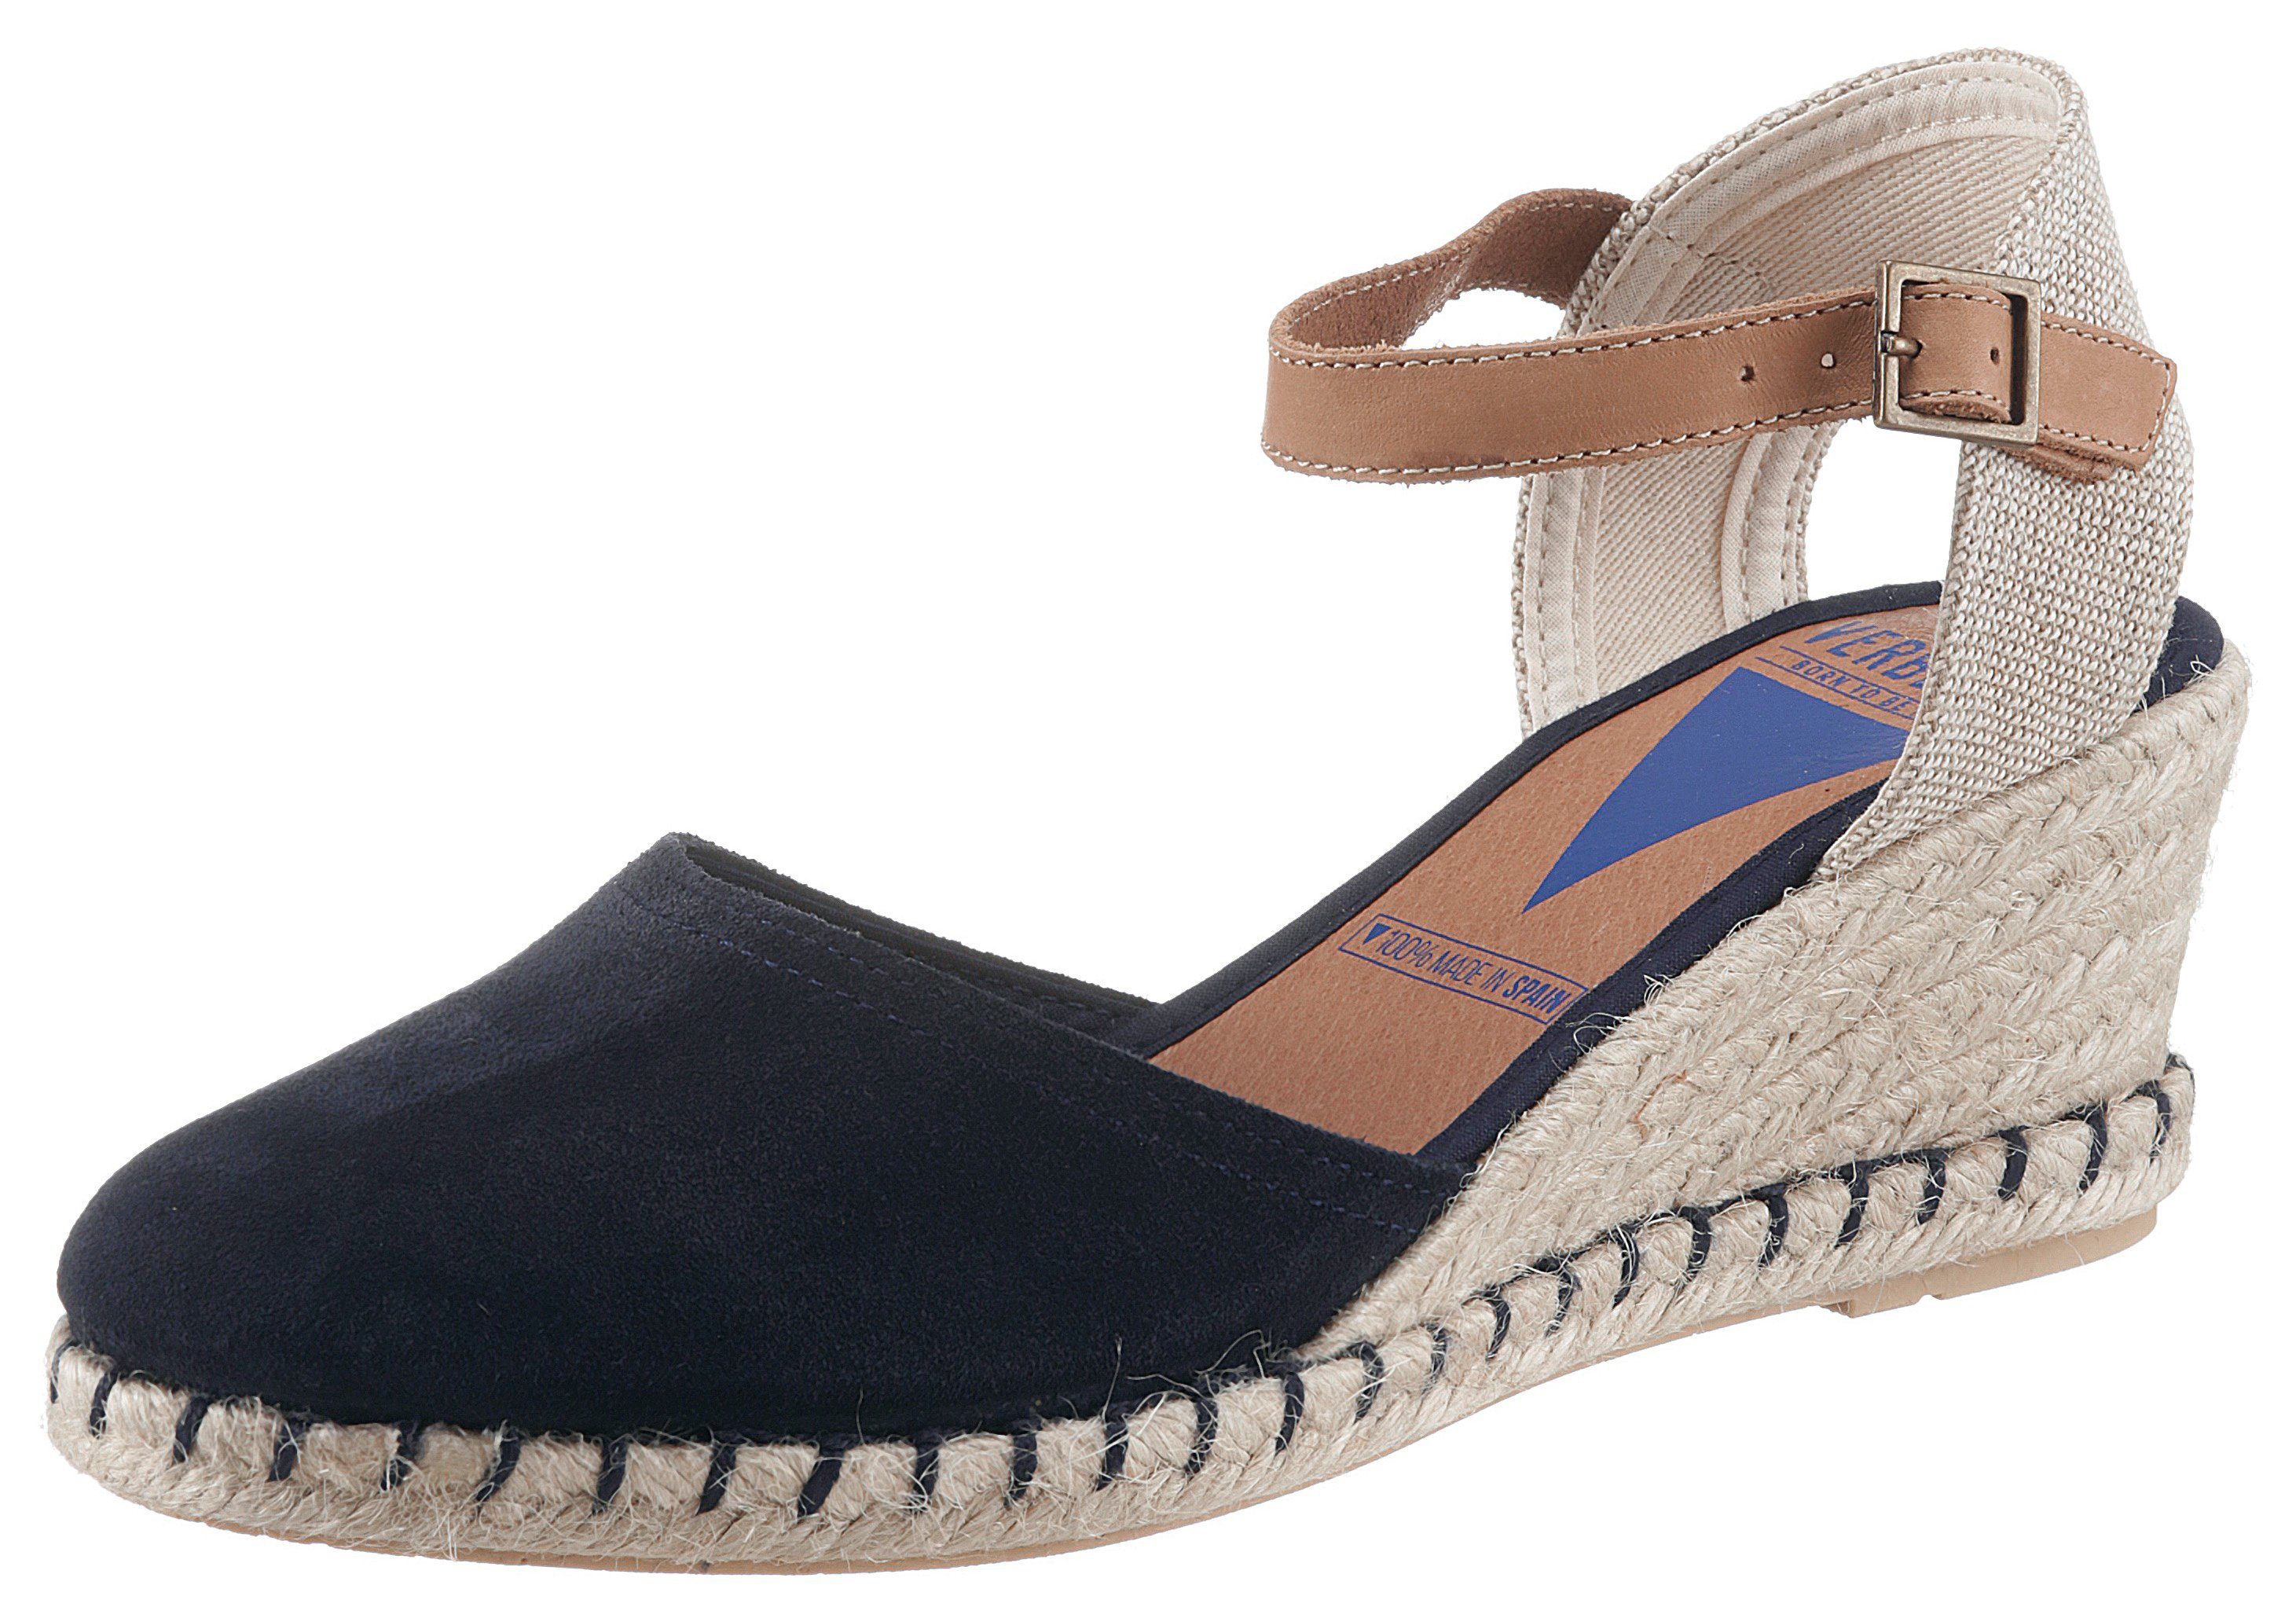 VERBENAS Sandalette mit Bast bezogenem Keilabsatz dunkelblau | Sandaletten